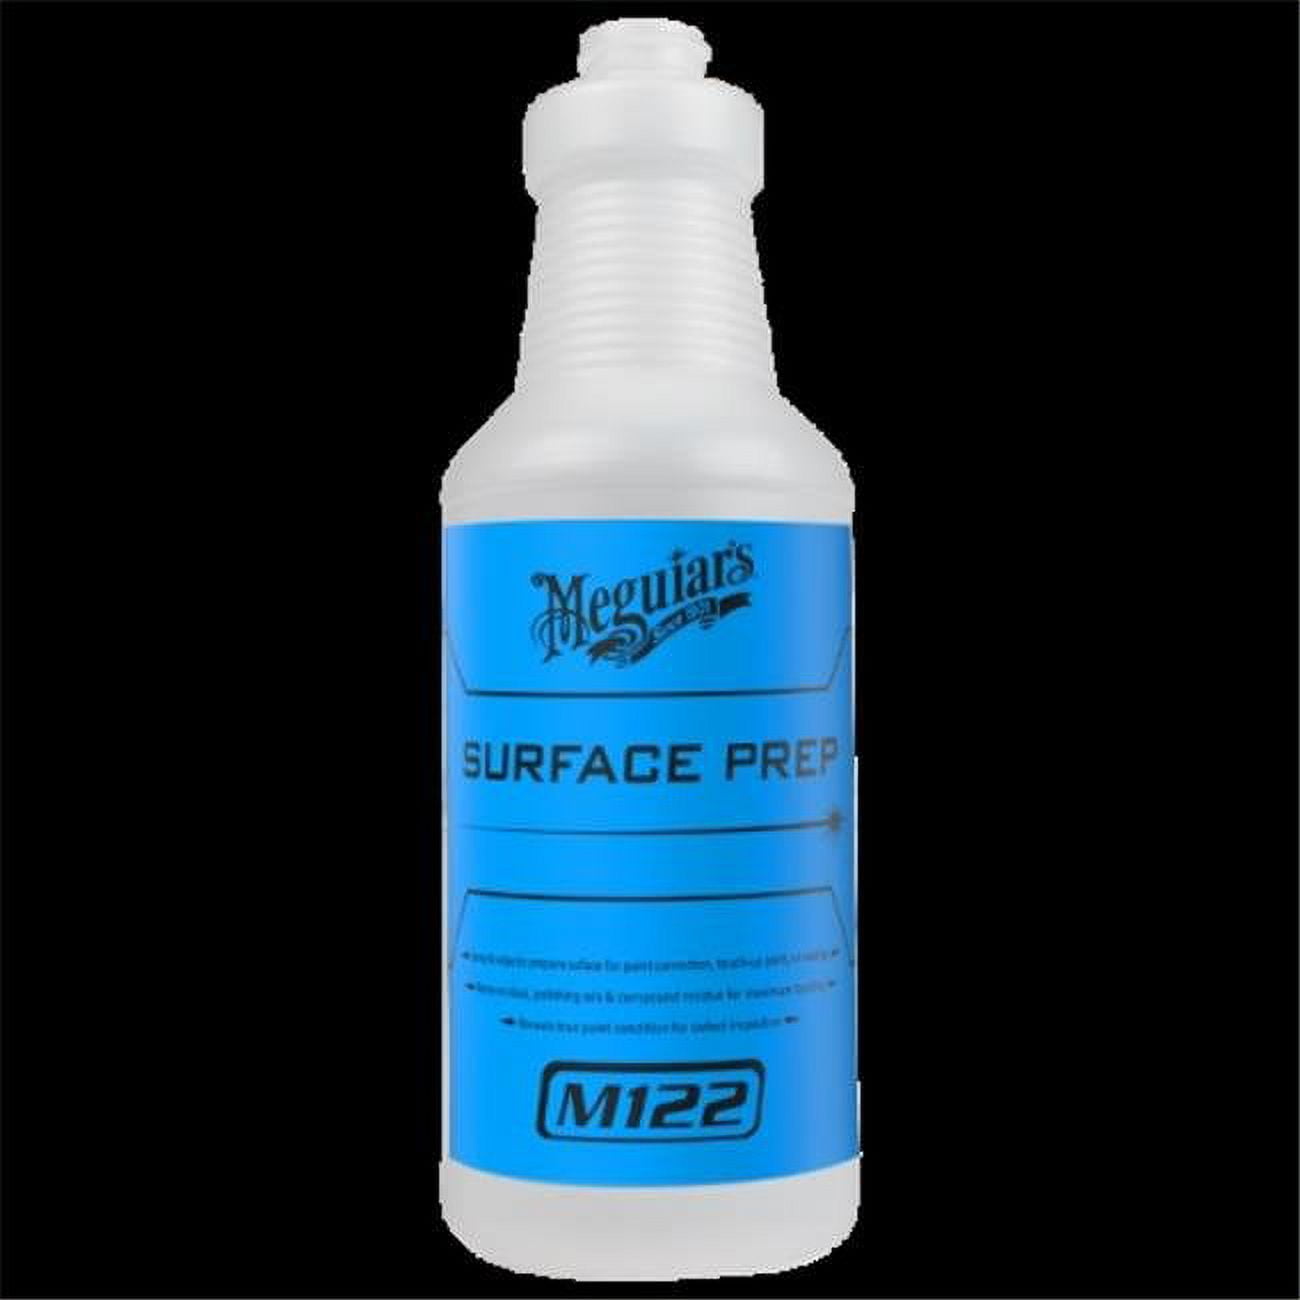 Meguiar’s Quik Scratch Eraser Kit, Off White, Liquid – Car Scratch Remover,  1 Pack